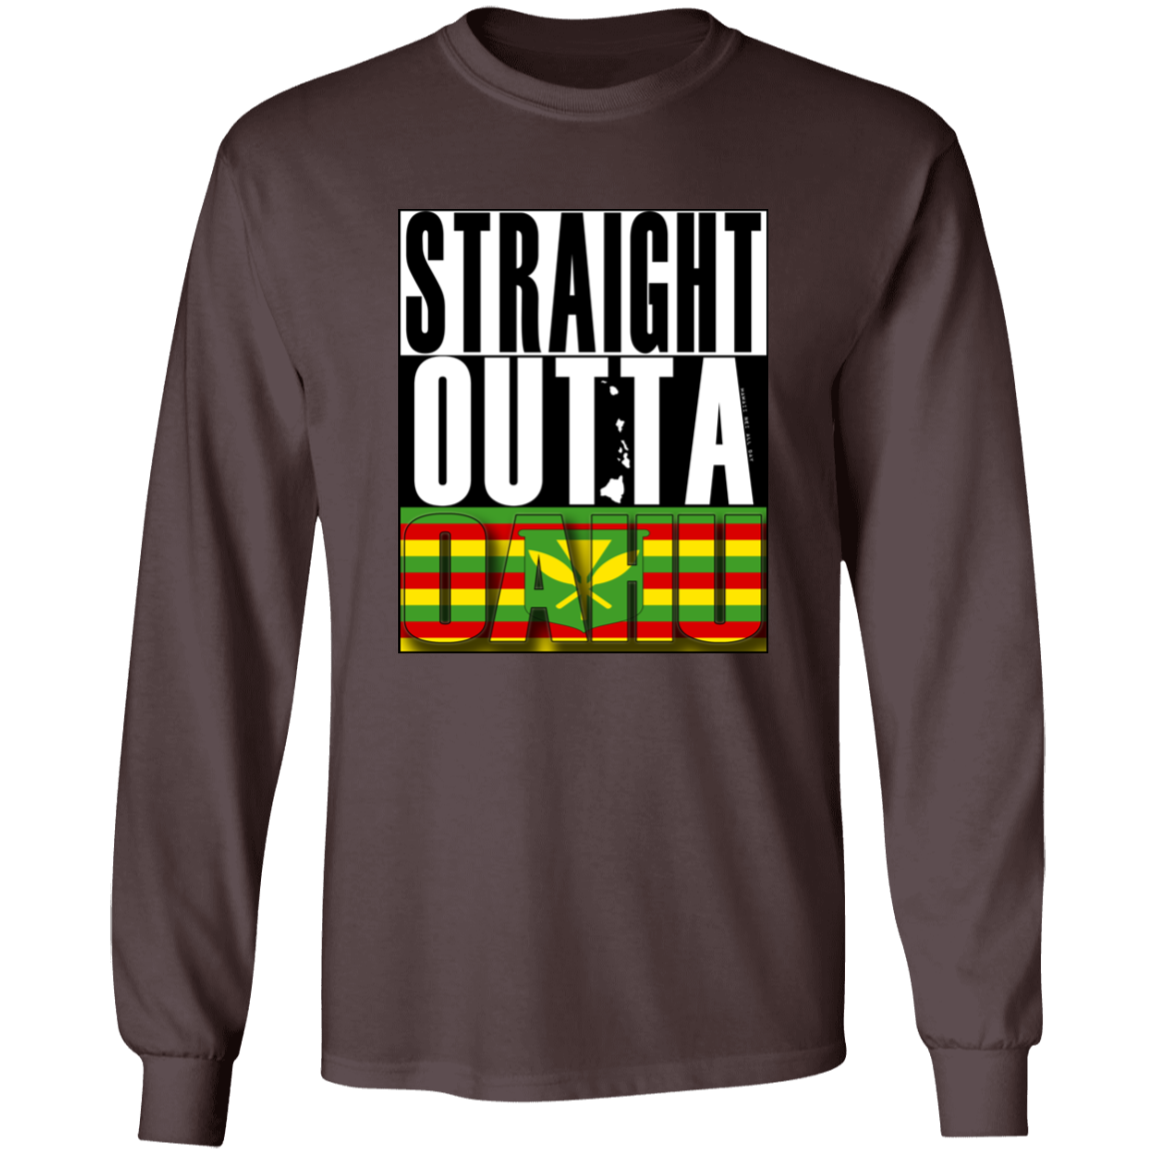 Straight Outta Oahu (Kanaka Maoli)  LS T-Shirt